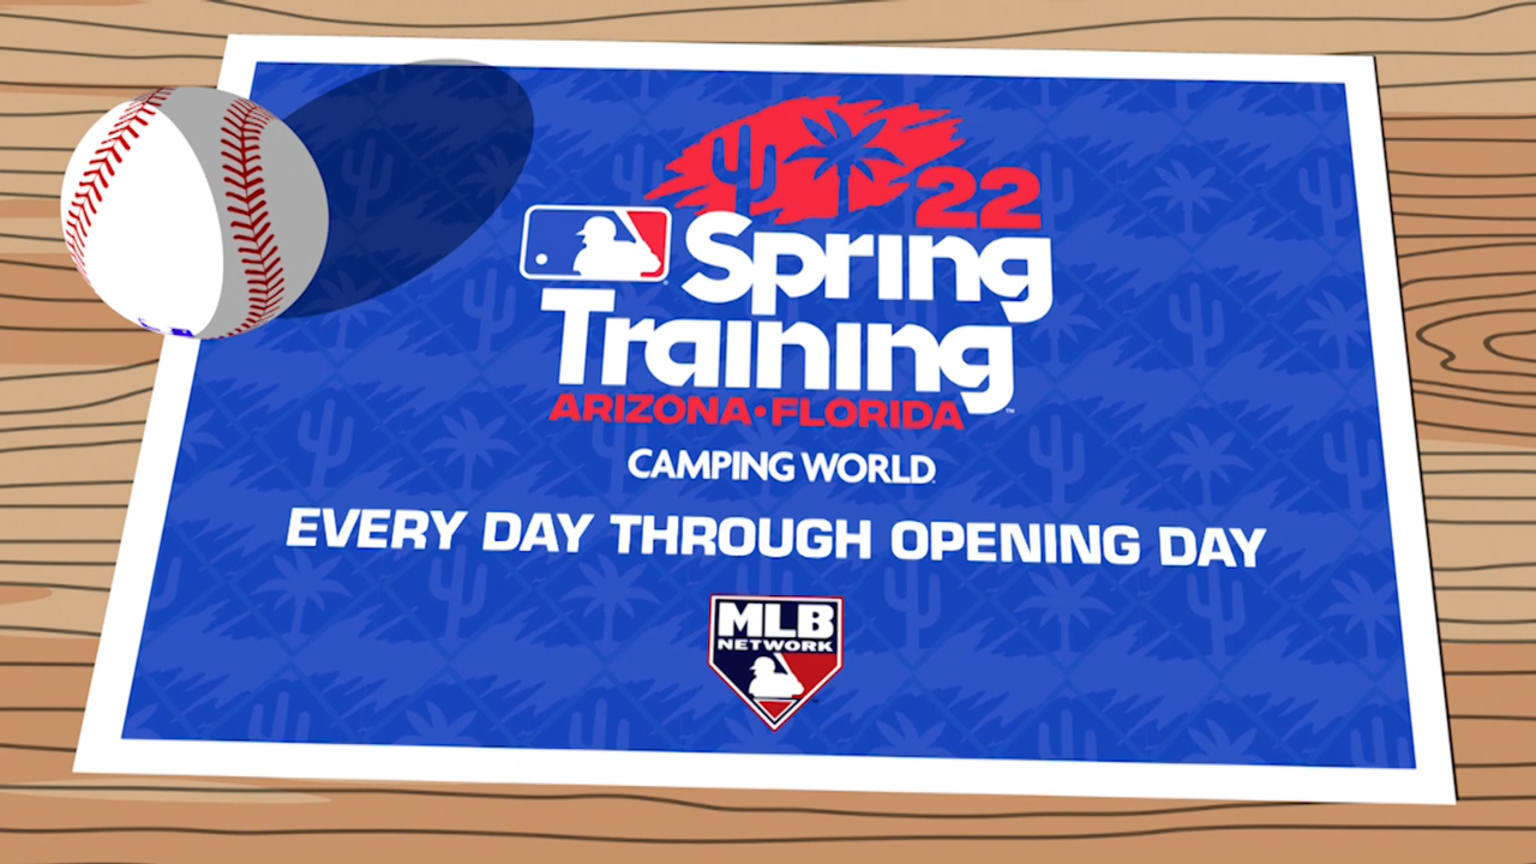 MLB Network Spring Training 2022 03/17/2022